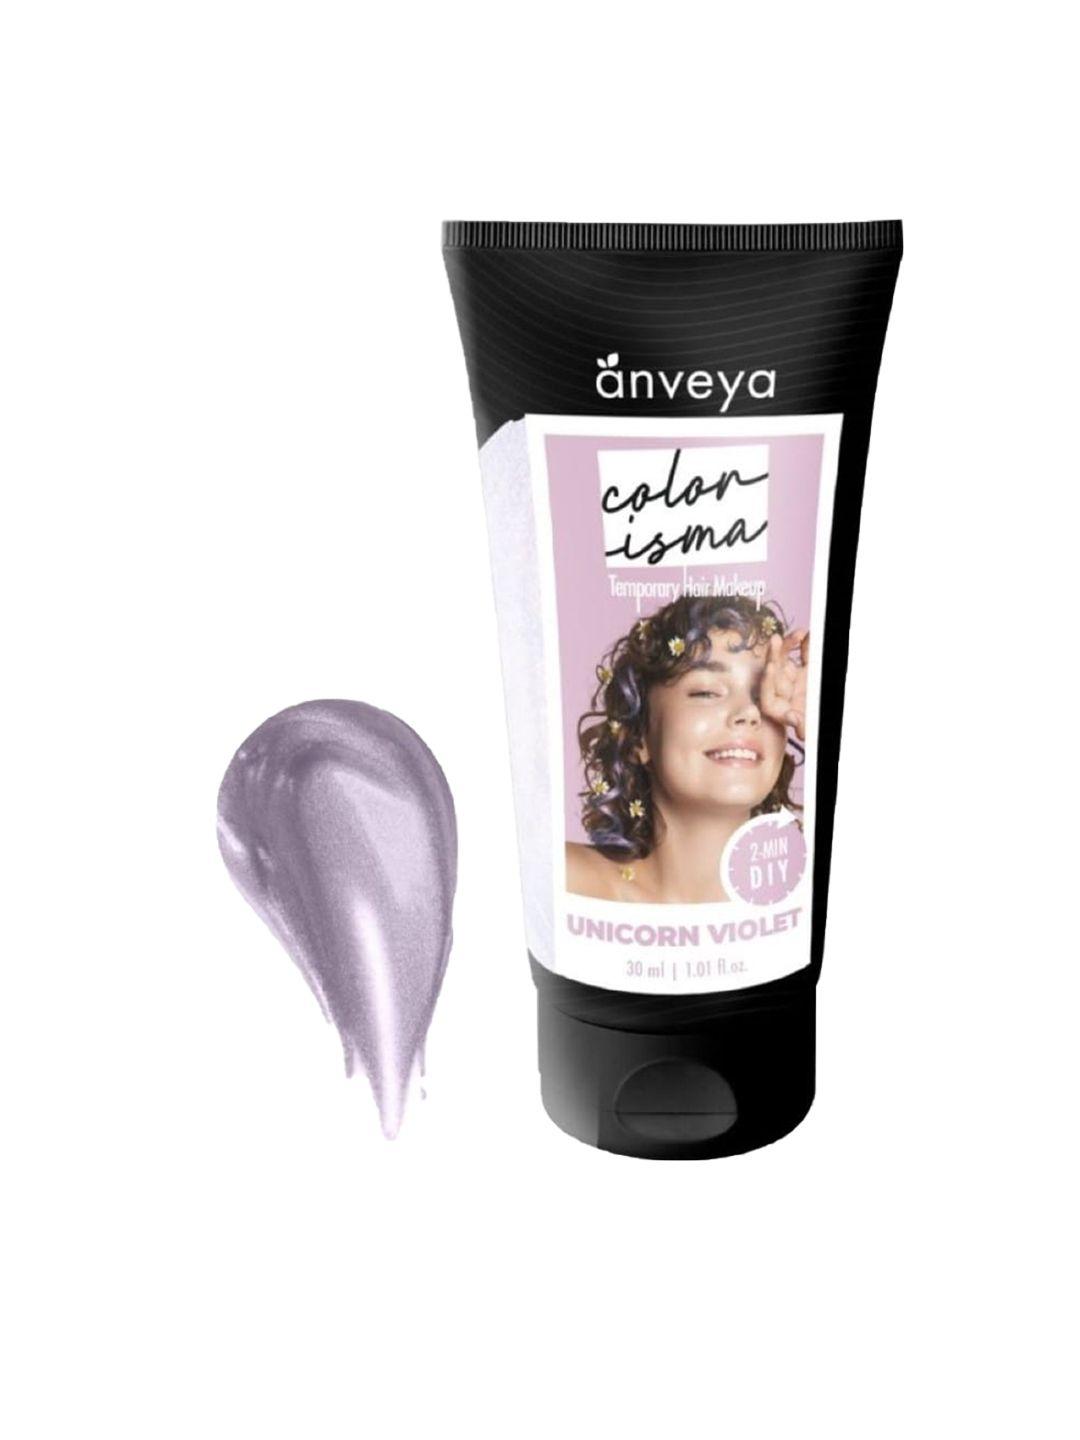 anveya colorisma temporary hair color 30ml - unicorn violet